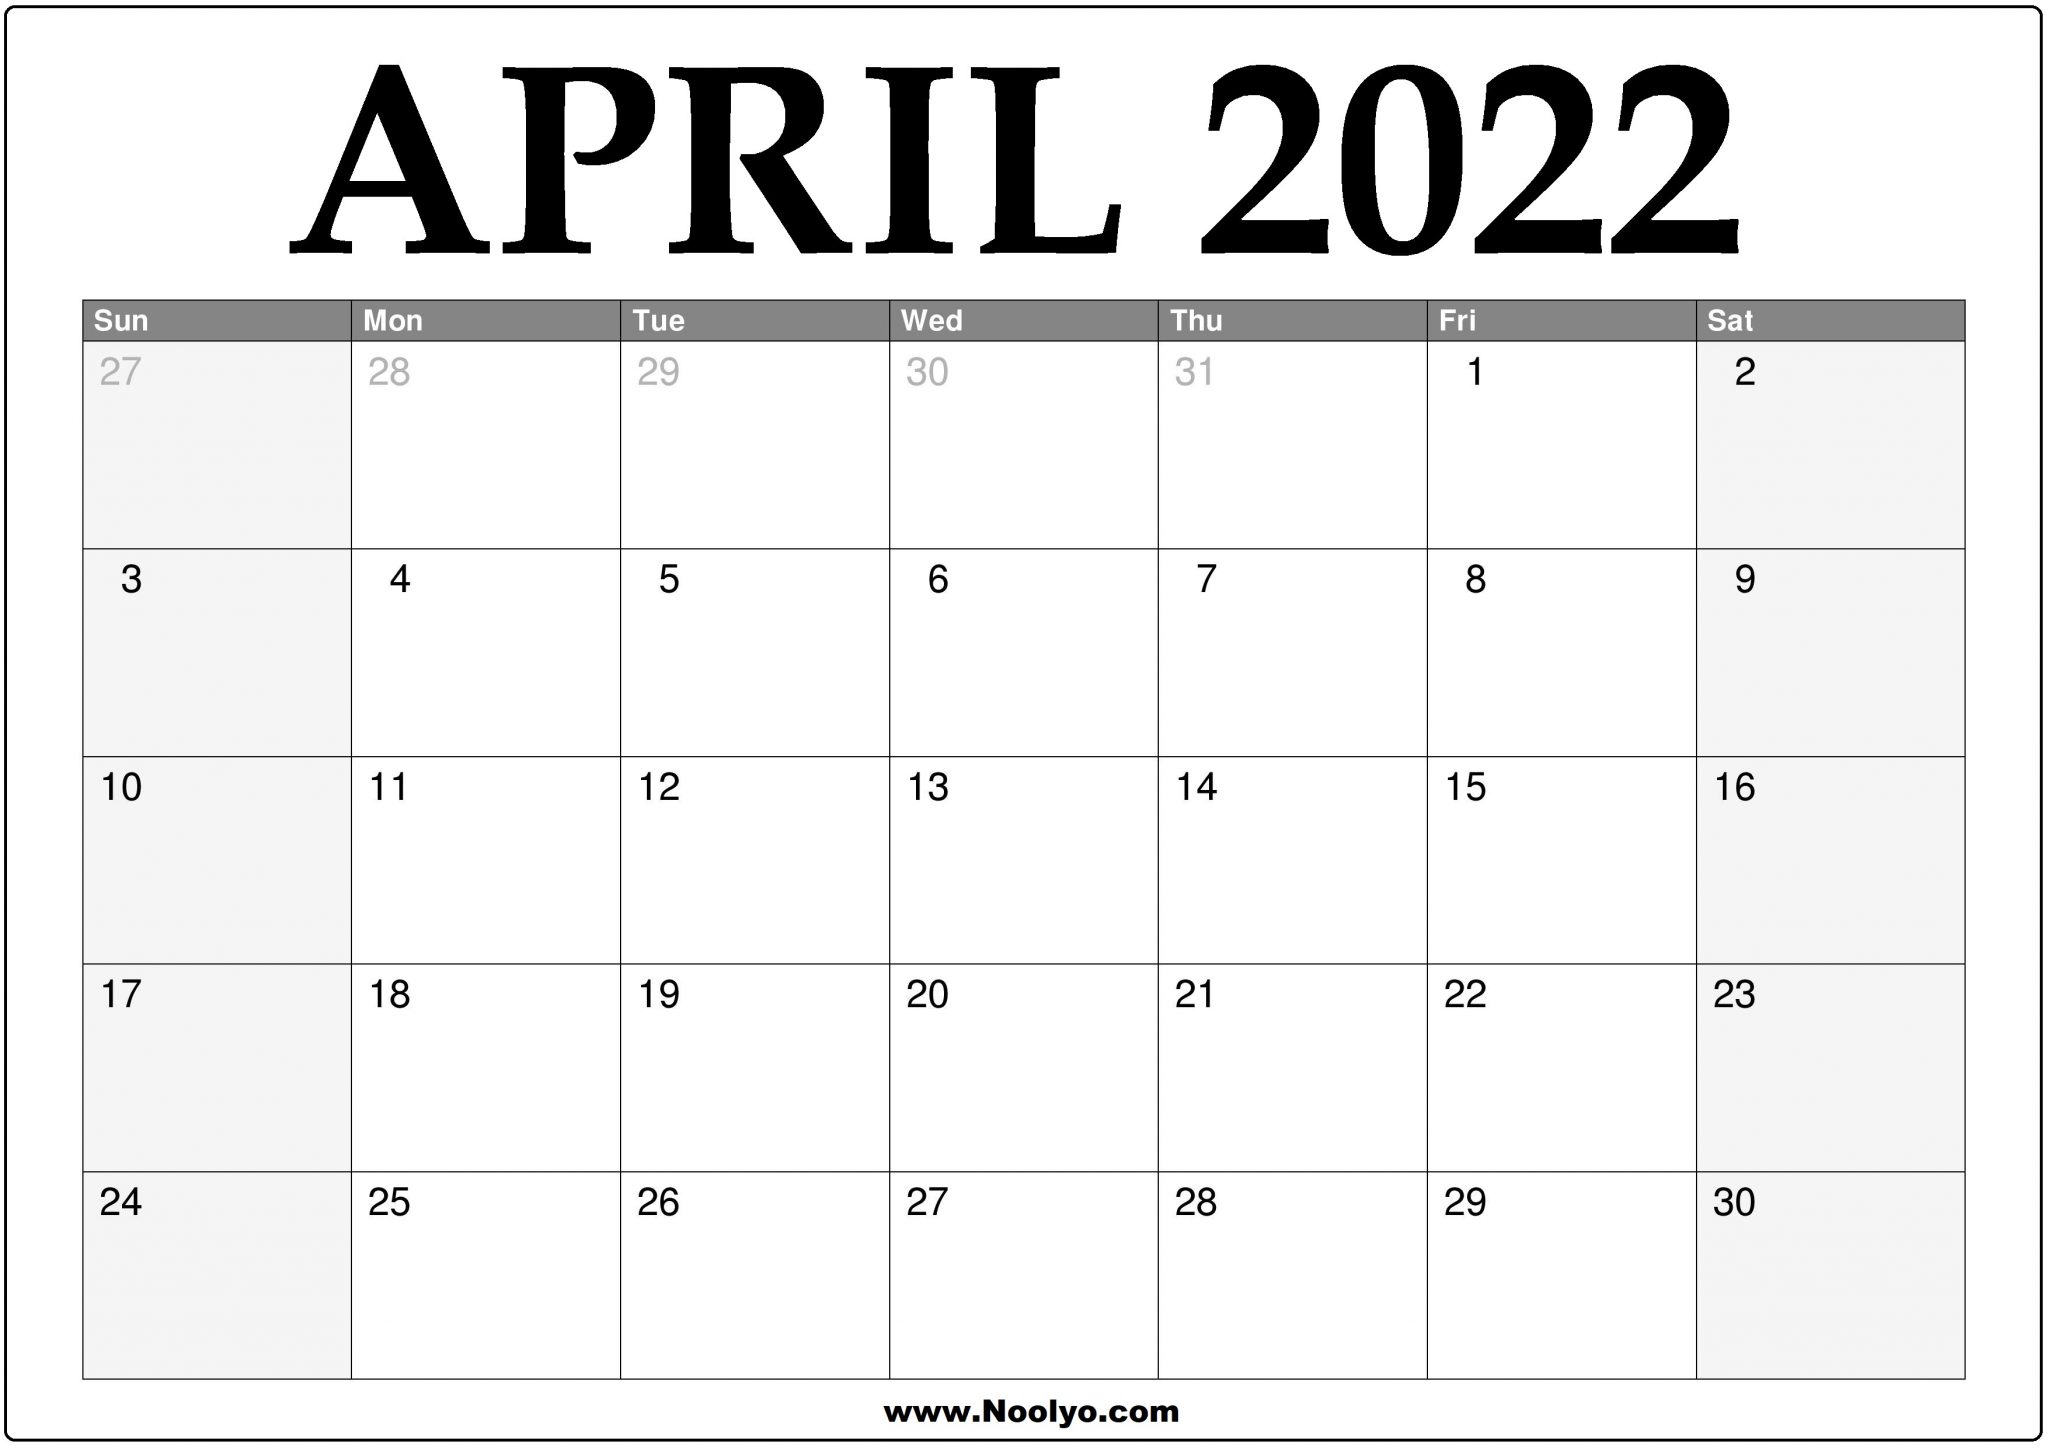 2022-april-calendar-printable-download-free-noolyo